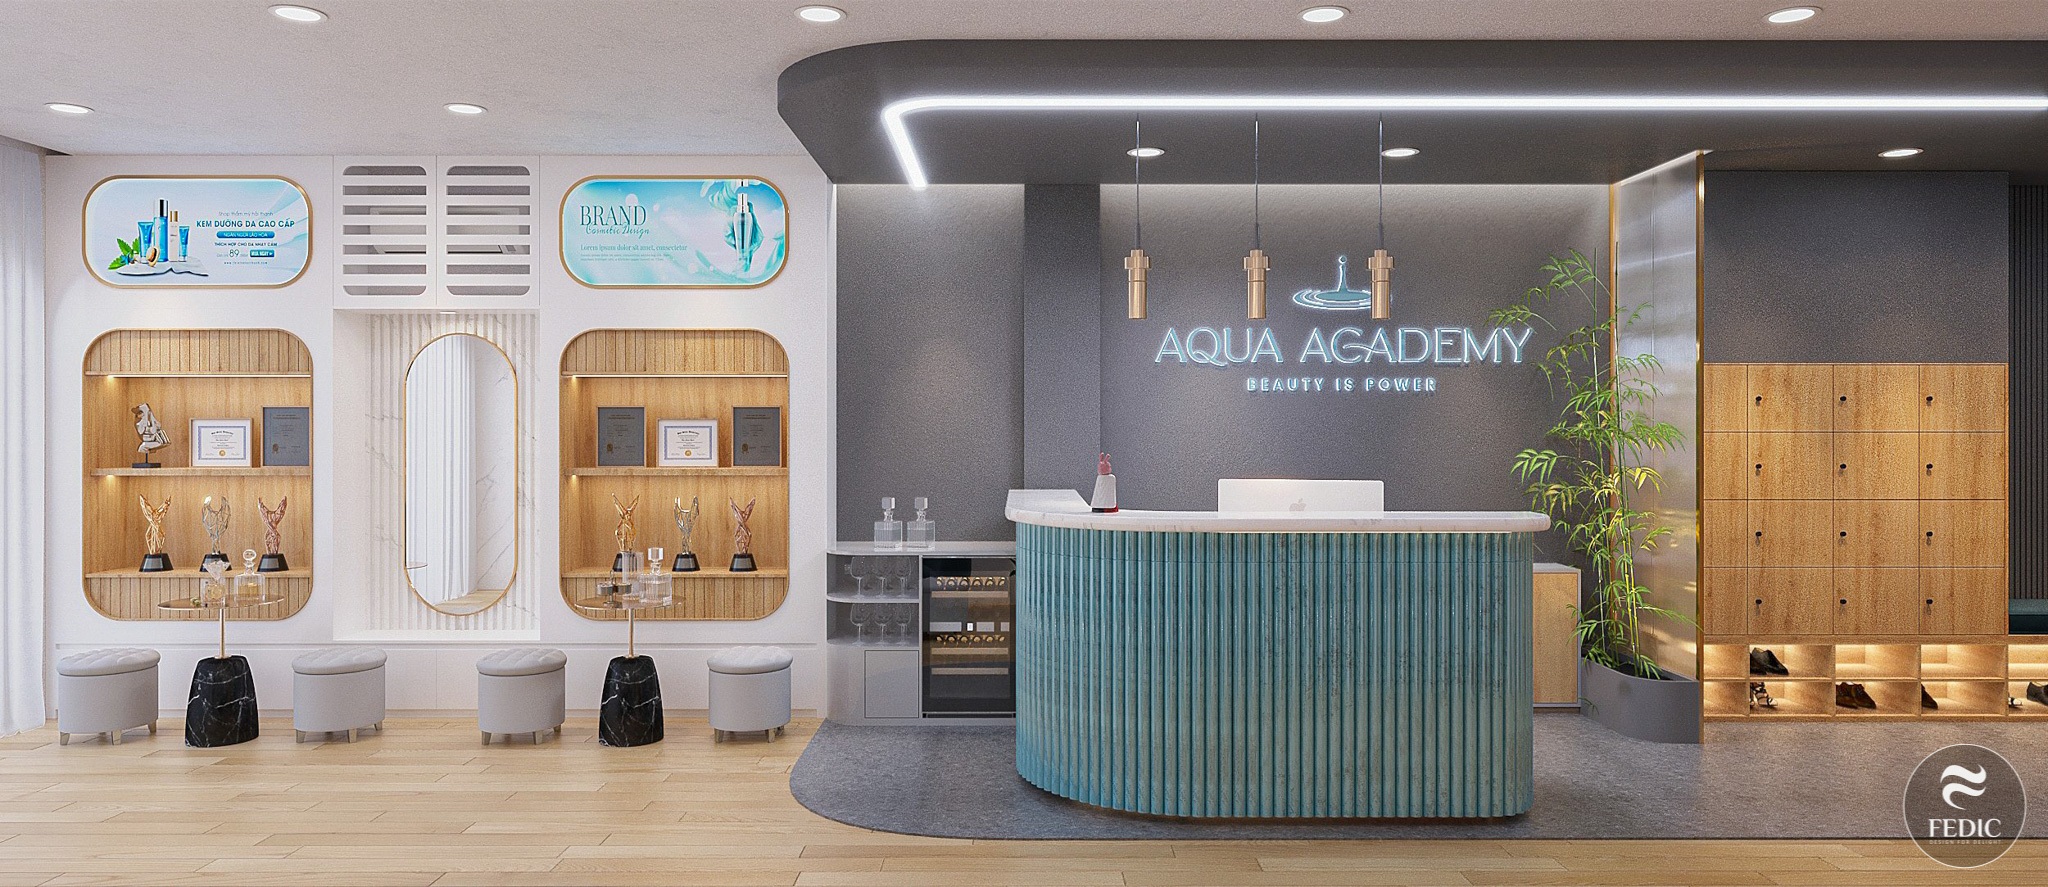 Thiết kế Spa Aqua Academy_Fedic Decor